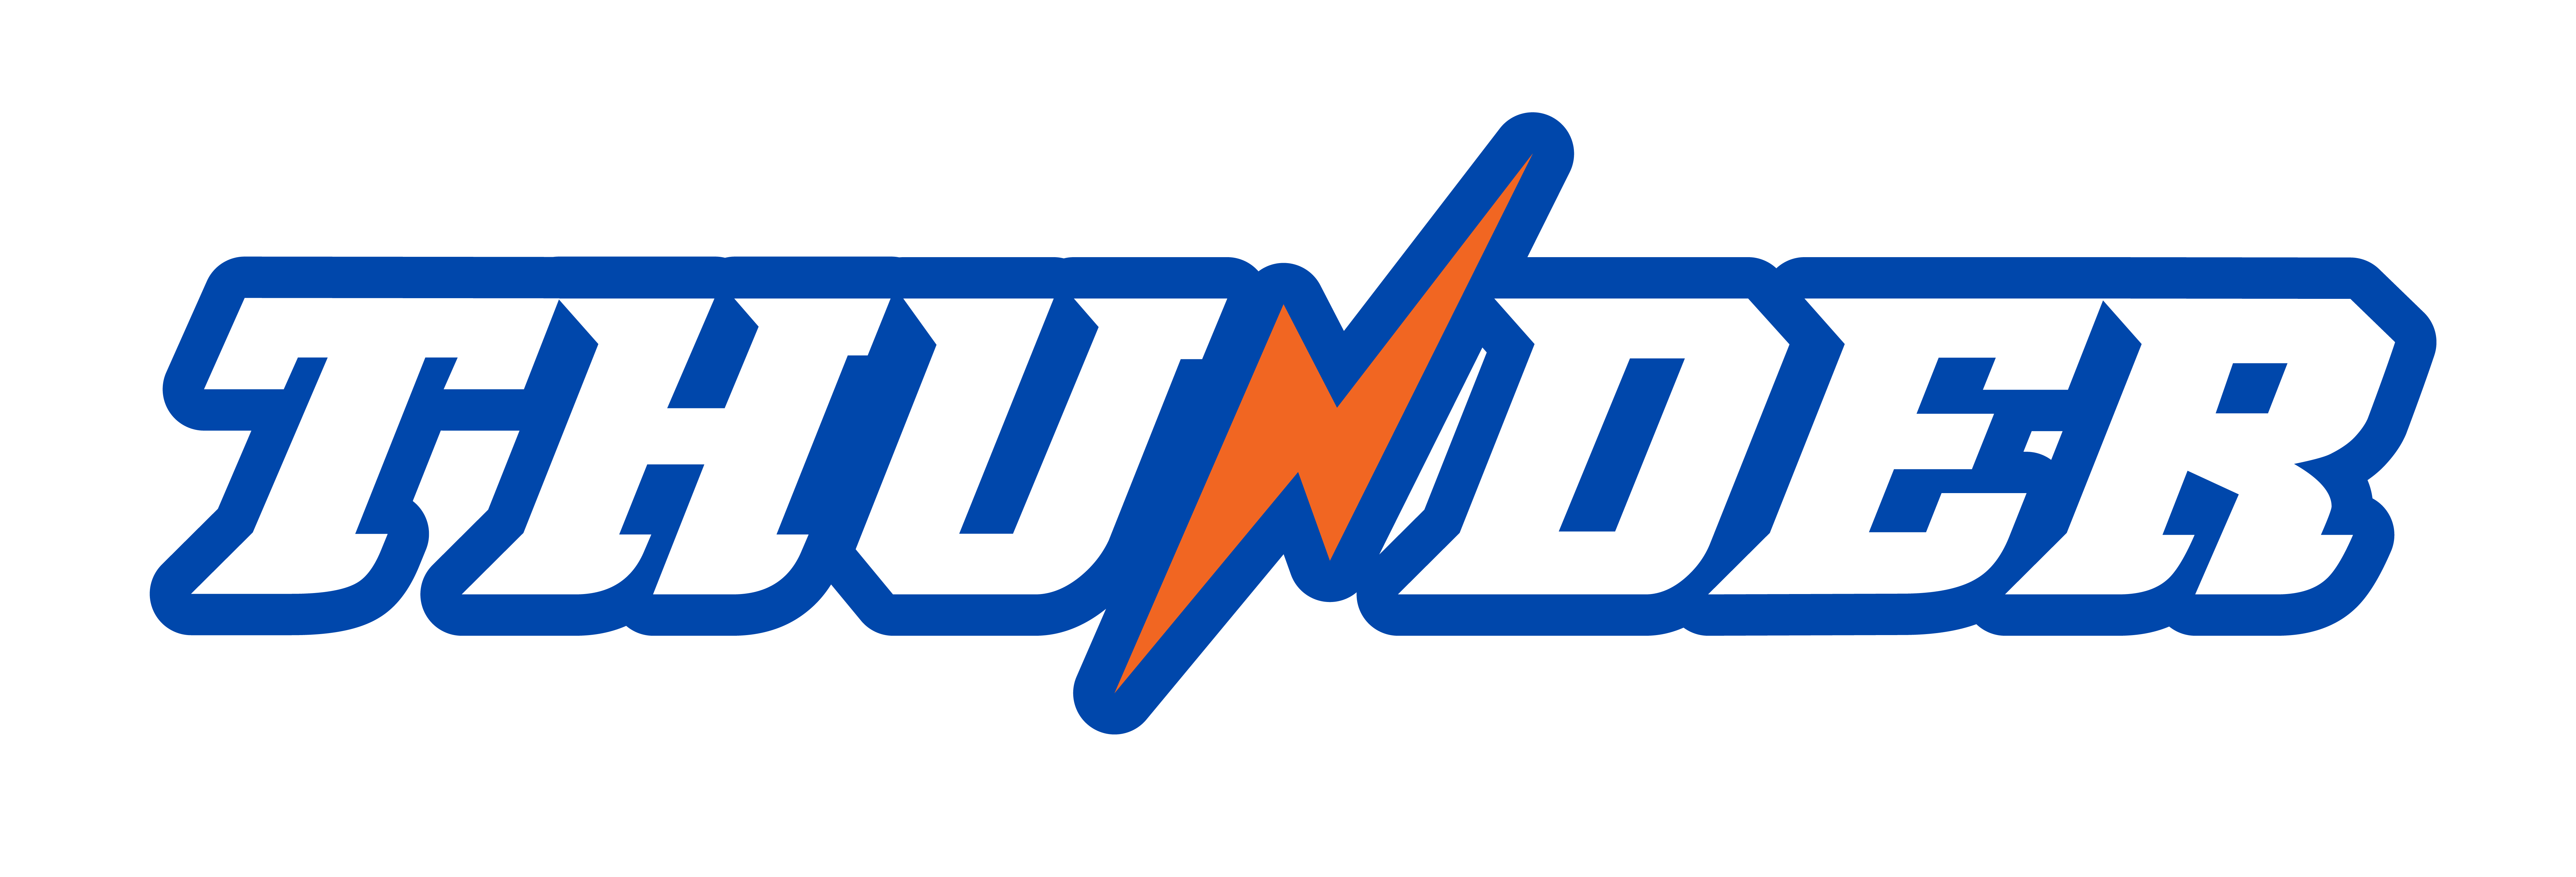 Thunder Lacrosse logo (Primary)